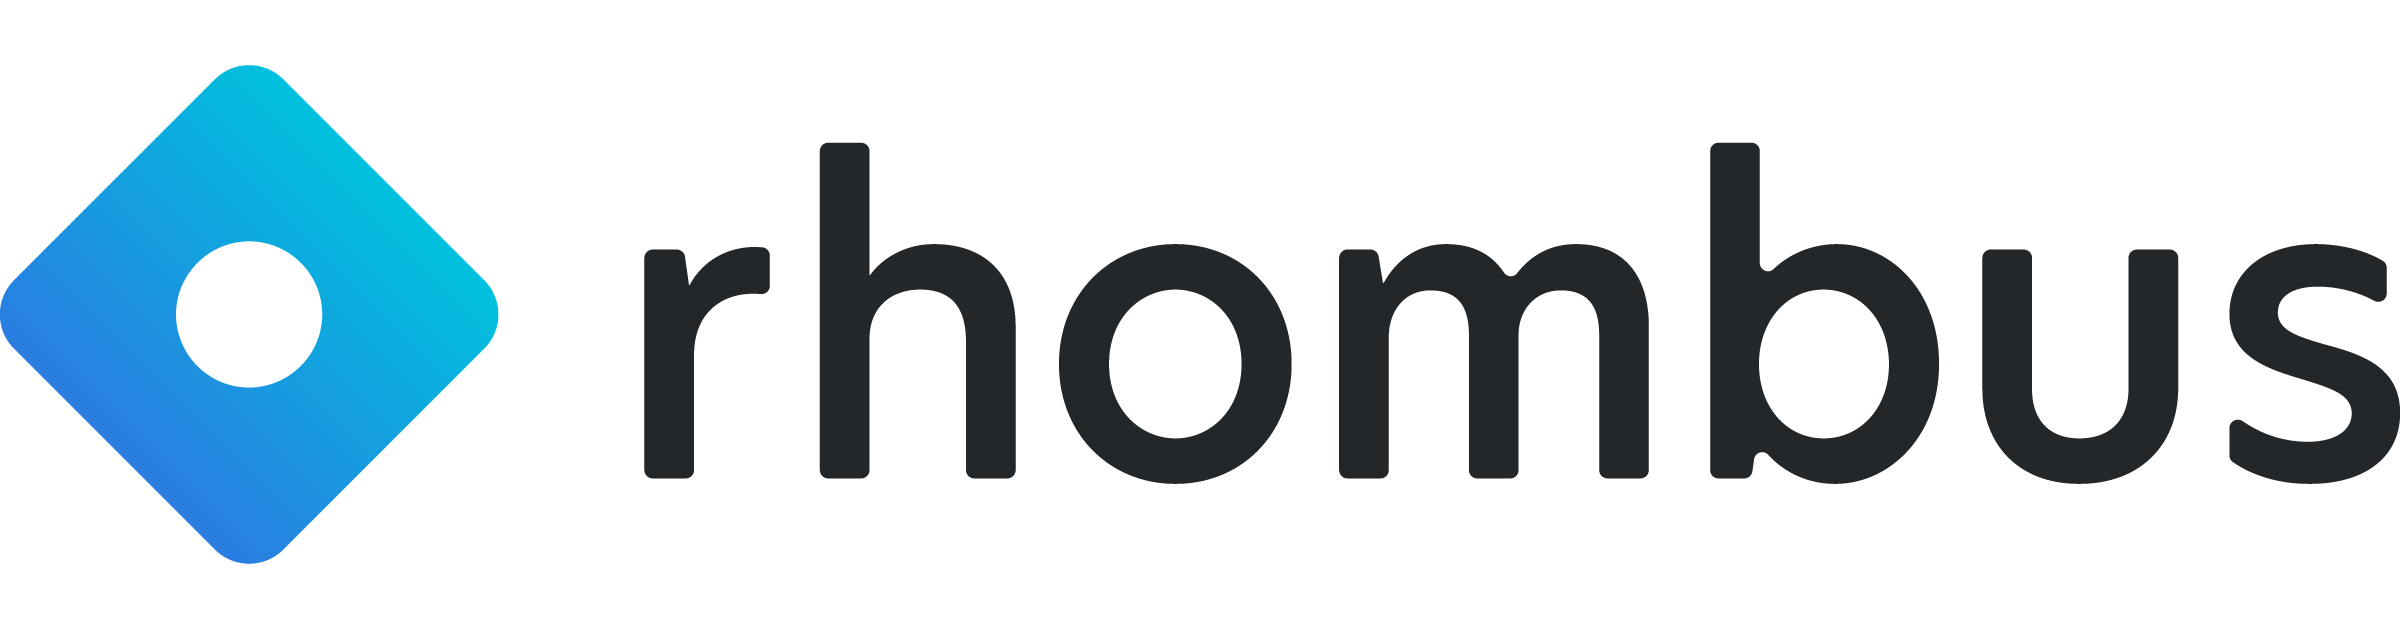 full-logo-horizontal-color-black